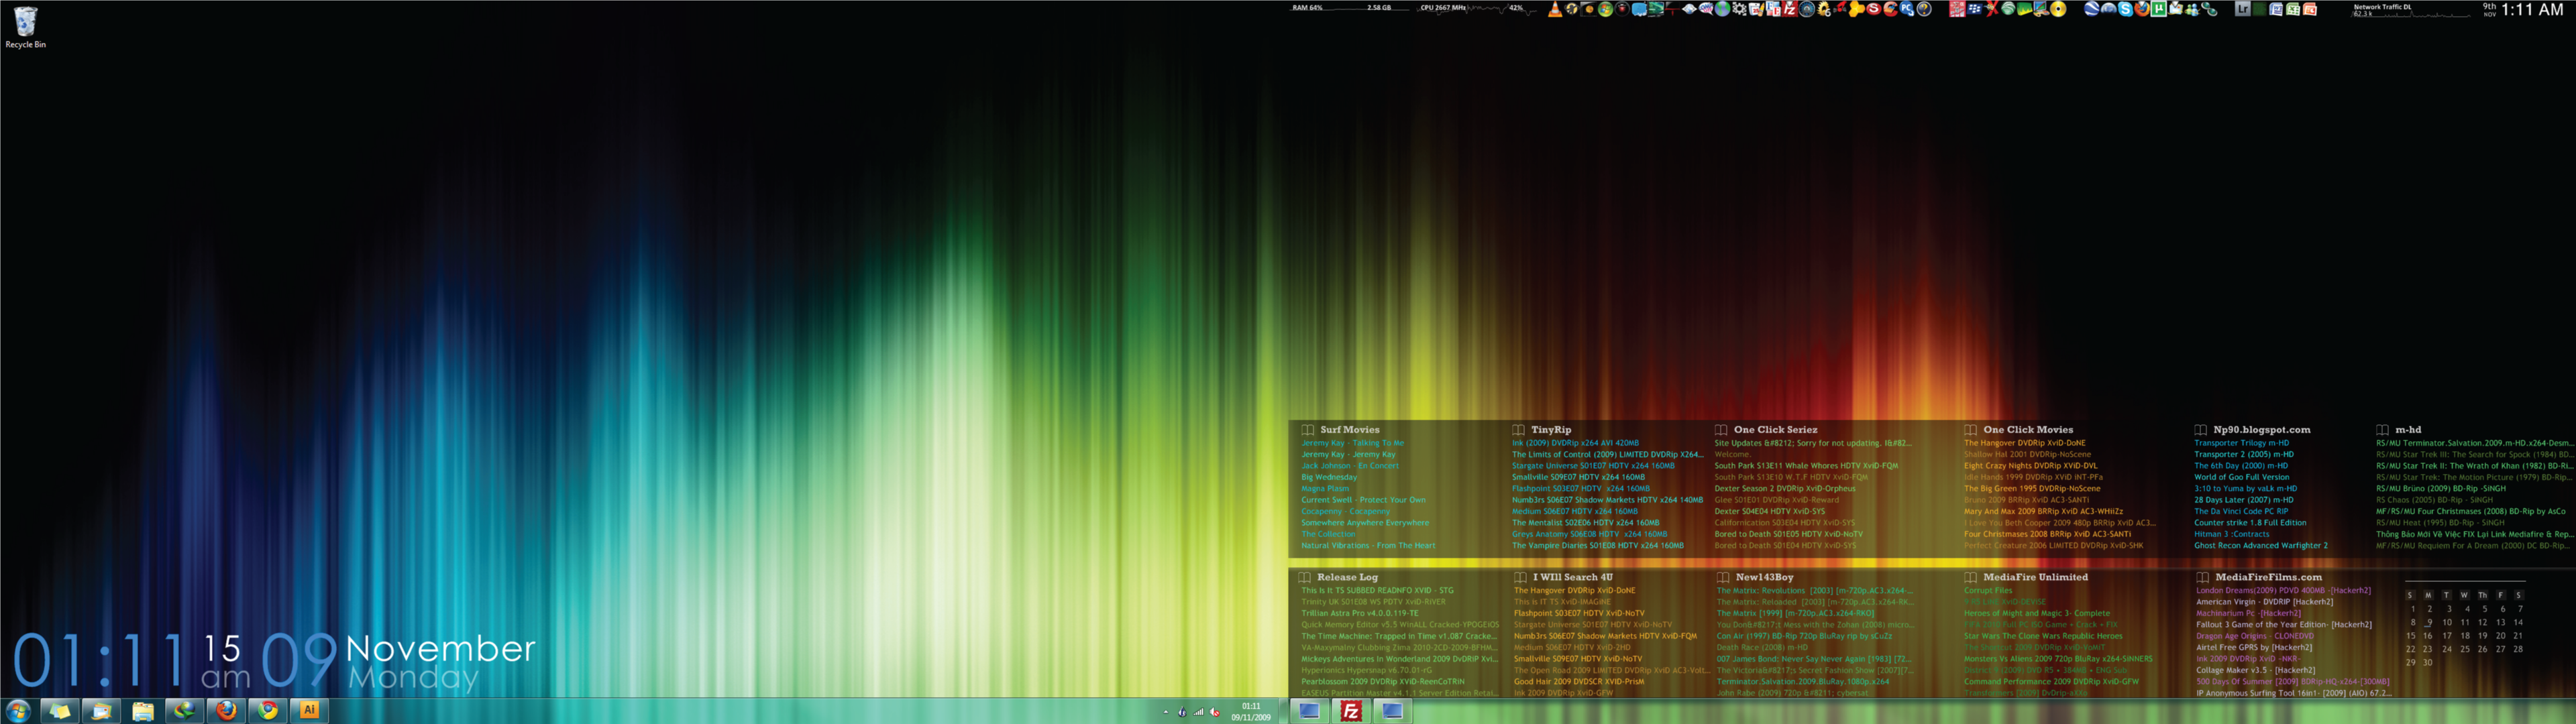 Dual Screen Desktop Windows 7 by bengatley on DeviantArt